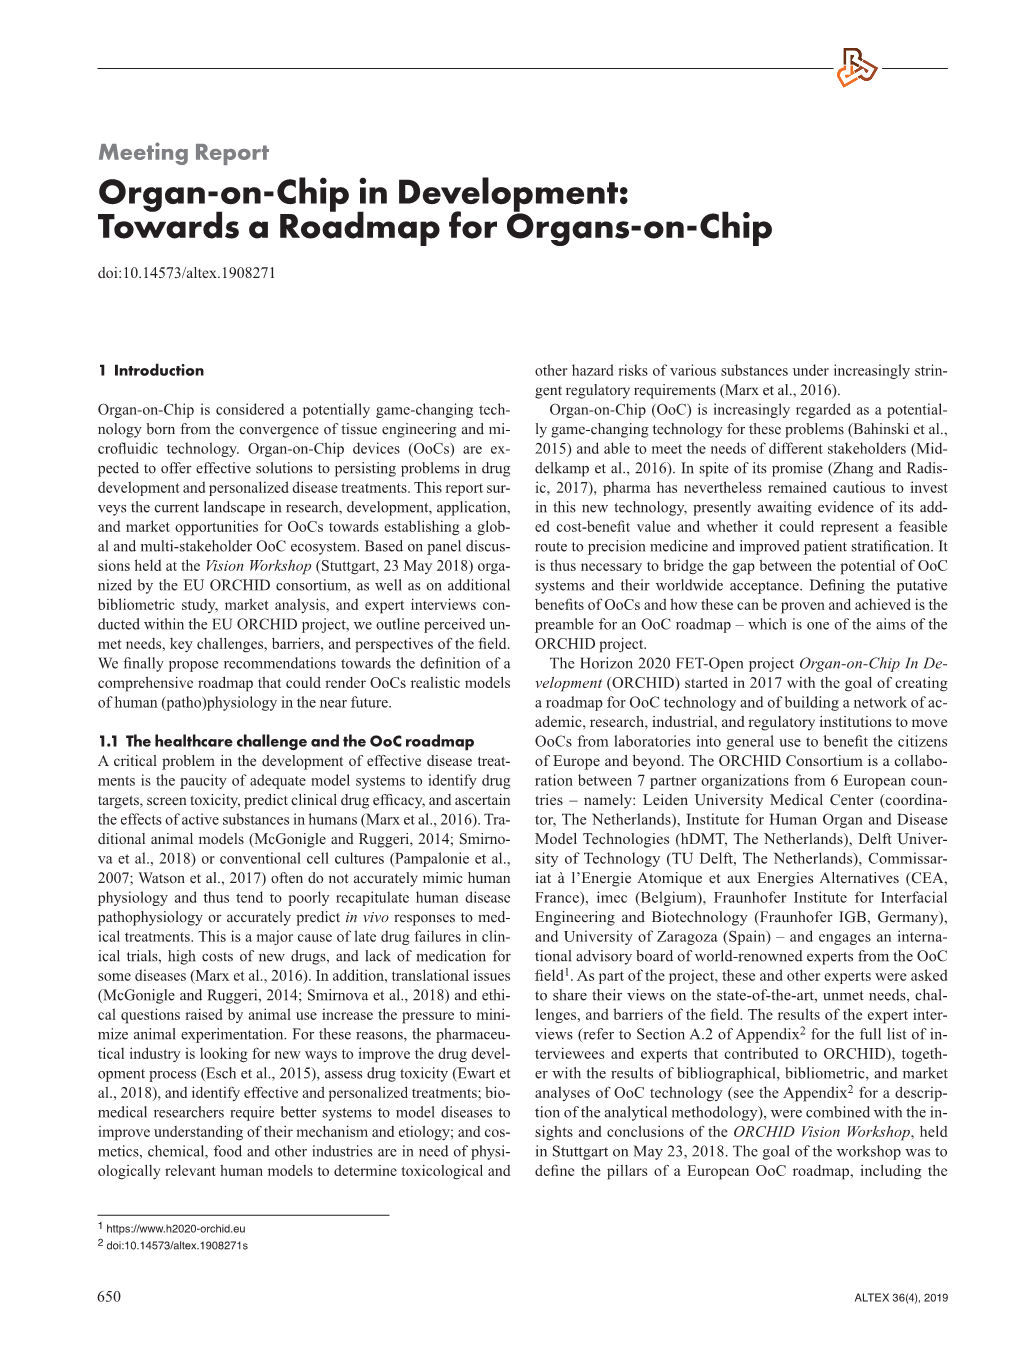 Organ-On-Chip in Development: Towards a Roadmap for Organs-On-Chip Doi:10.14573/Altex.1908271